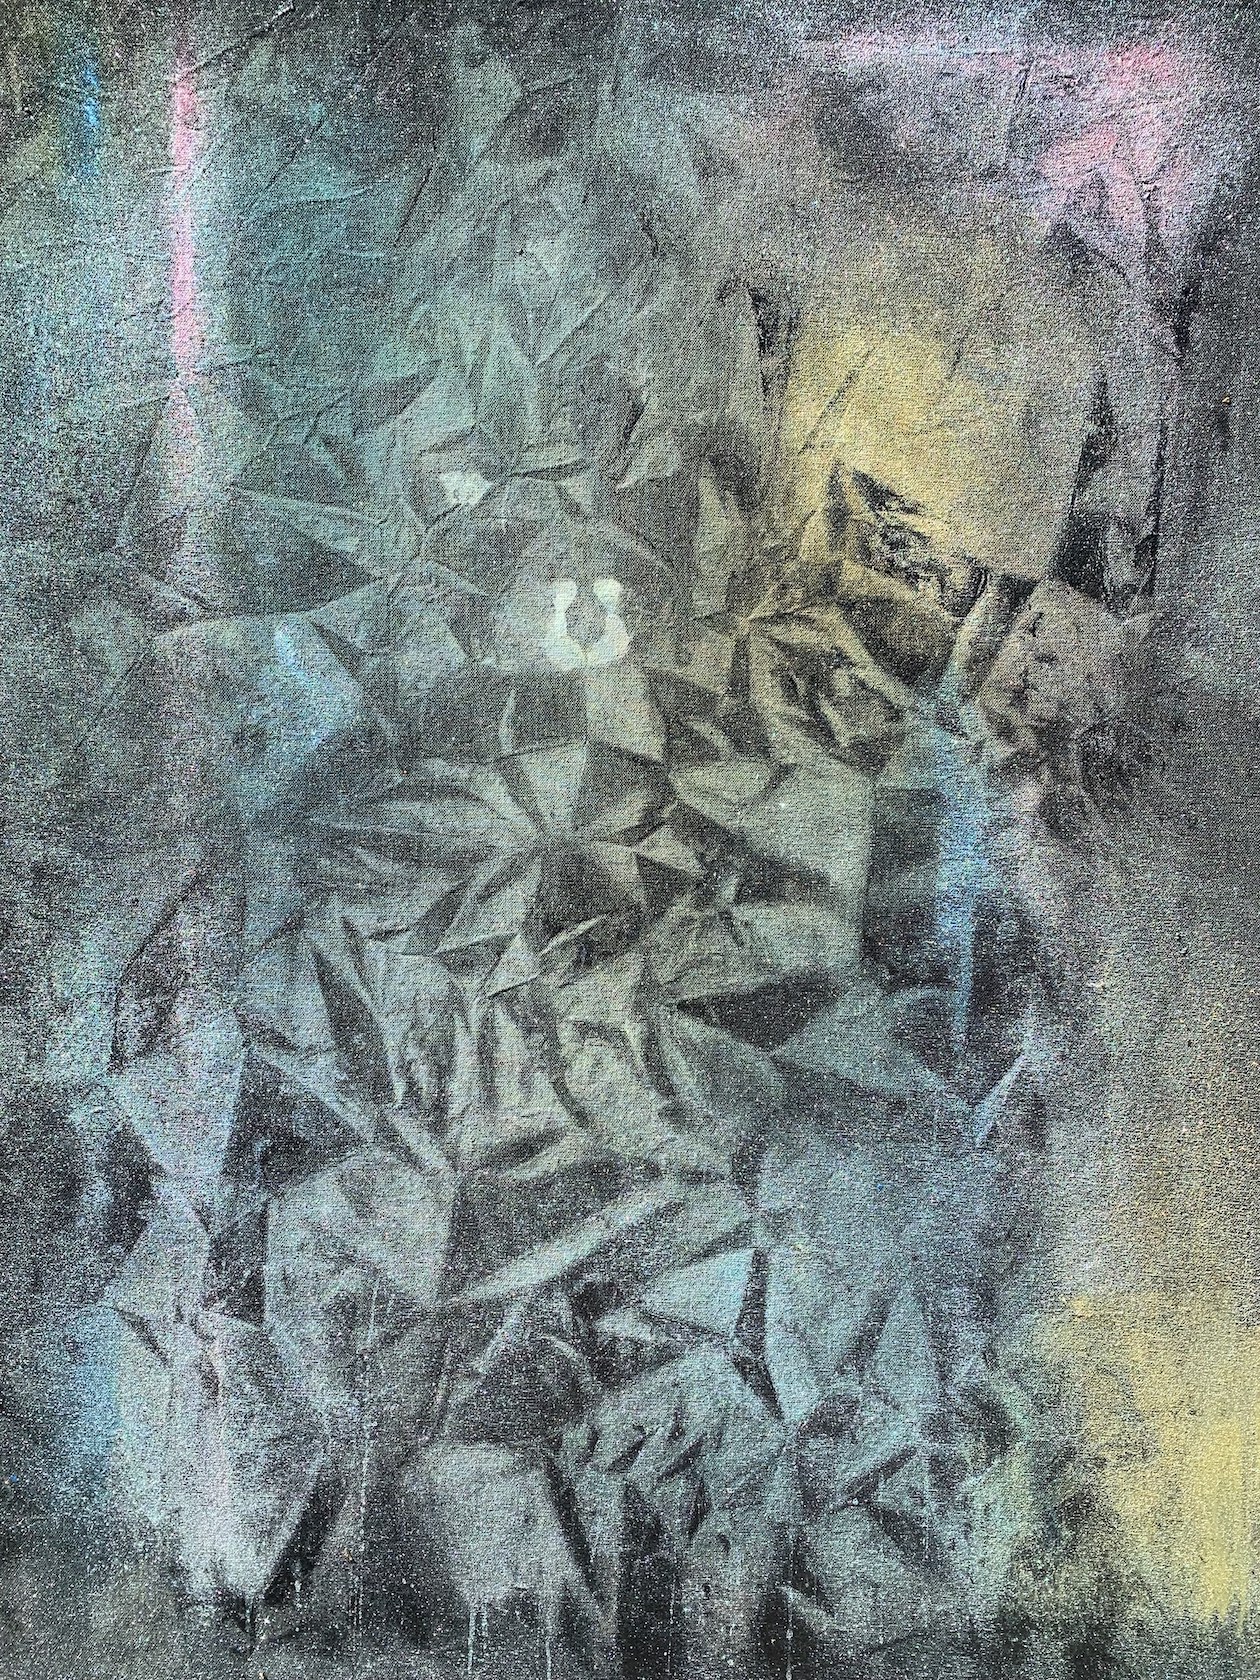 Kristen Stephen, "Together", inks and glitter on canvas, 76 x 102cm, c. 2021. Kristen Stephen is